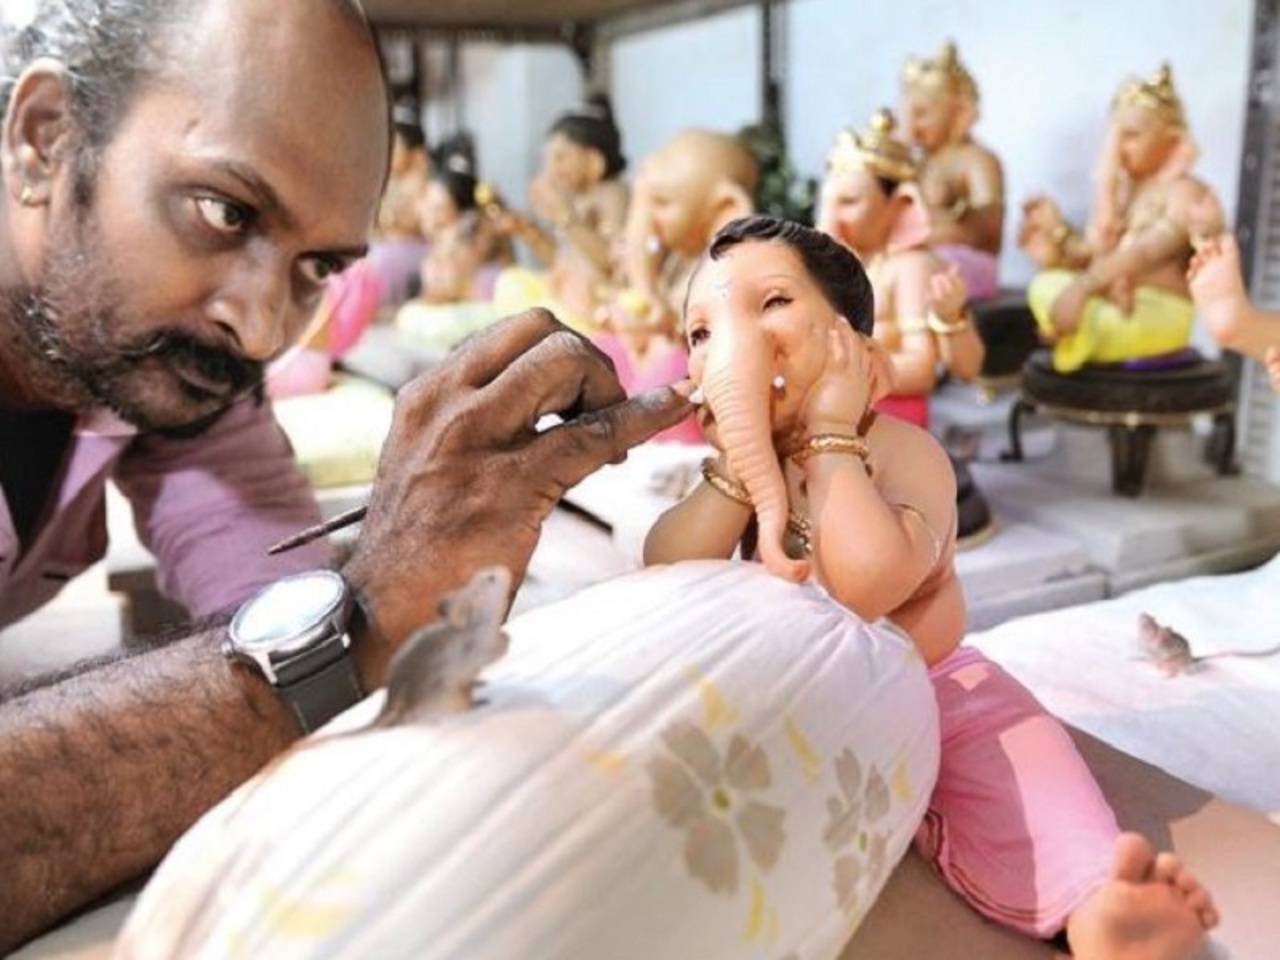 Parel sculptor brings the child in Ganesha alive | Mumbai News ...